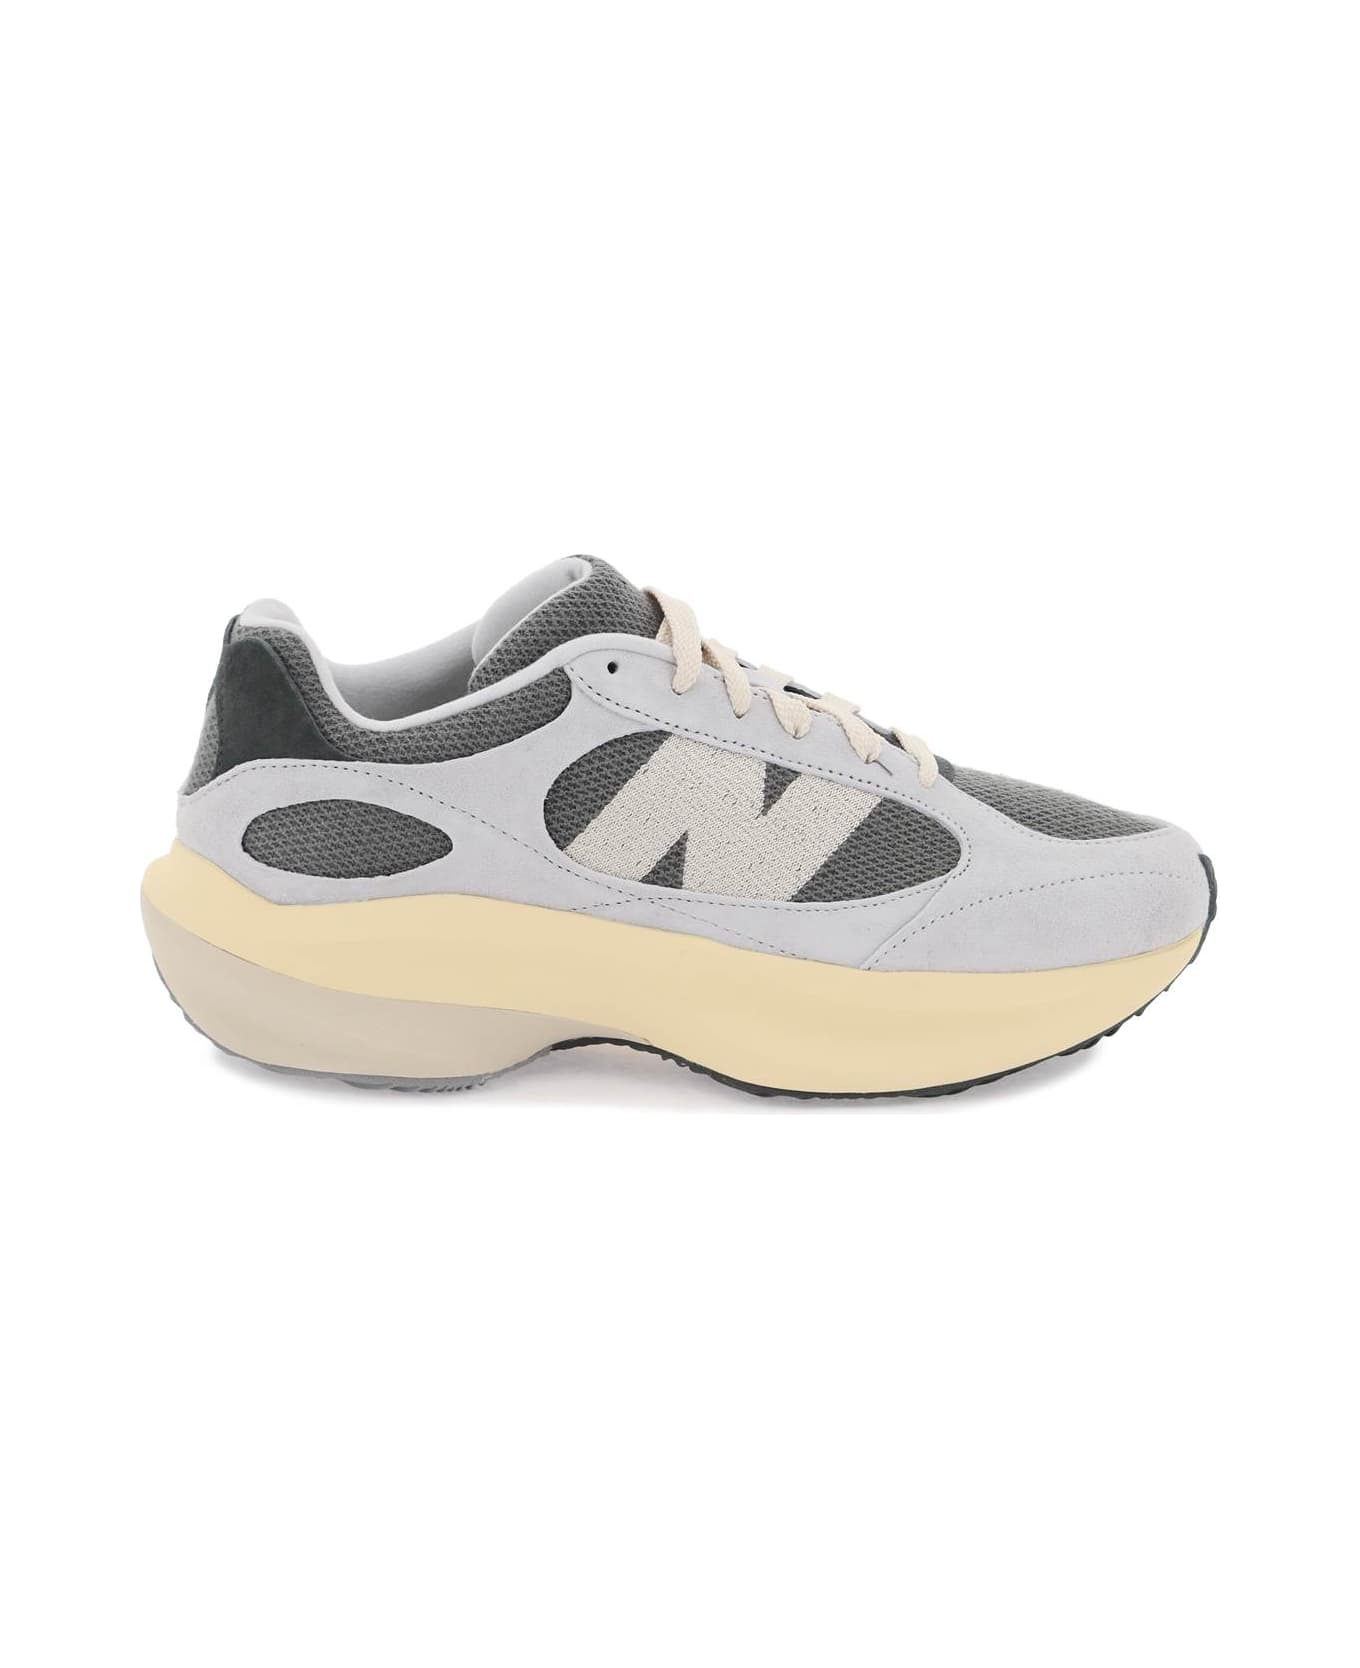 New Balance Wrpd Runner Sneakers - GREY MATTER (Grey)